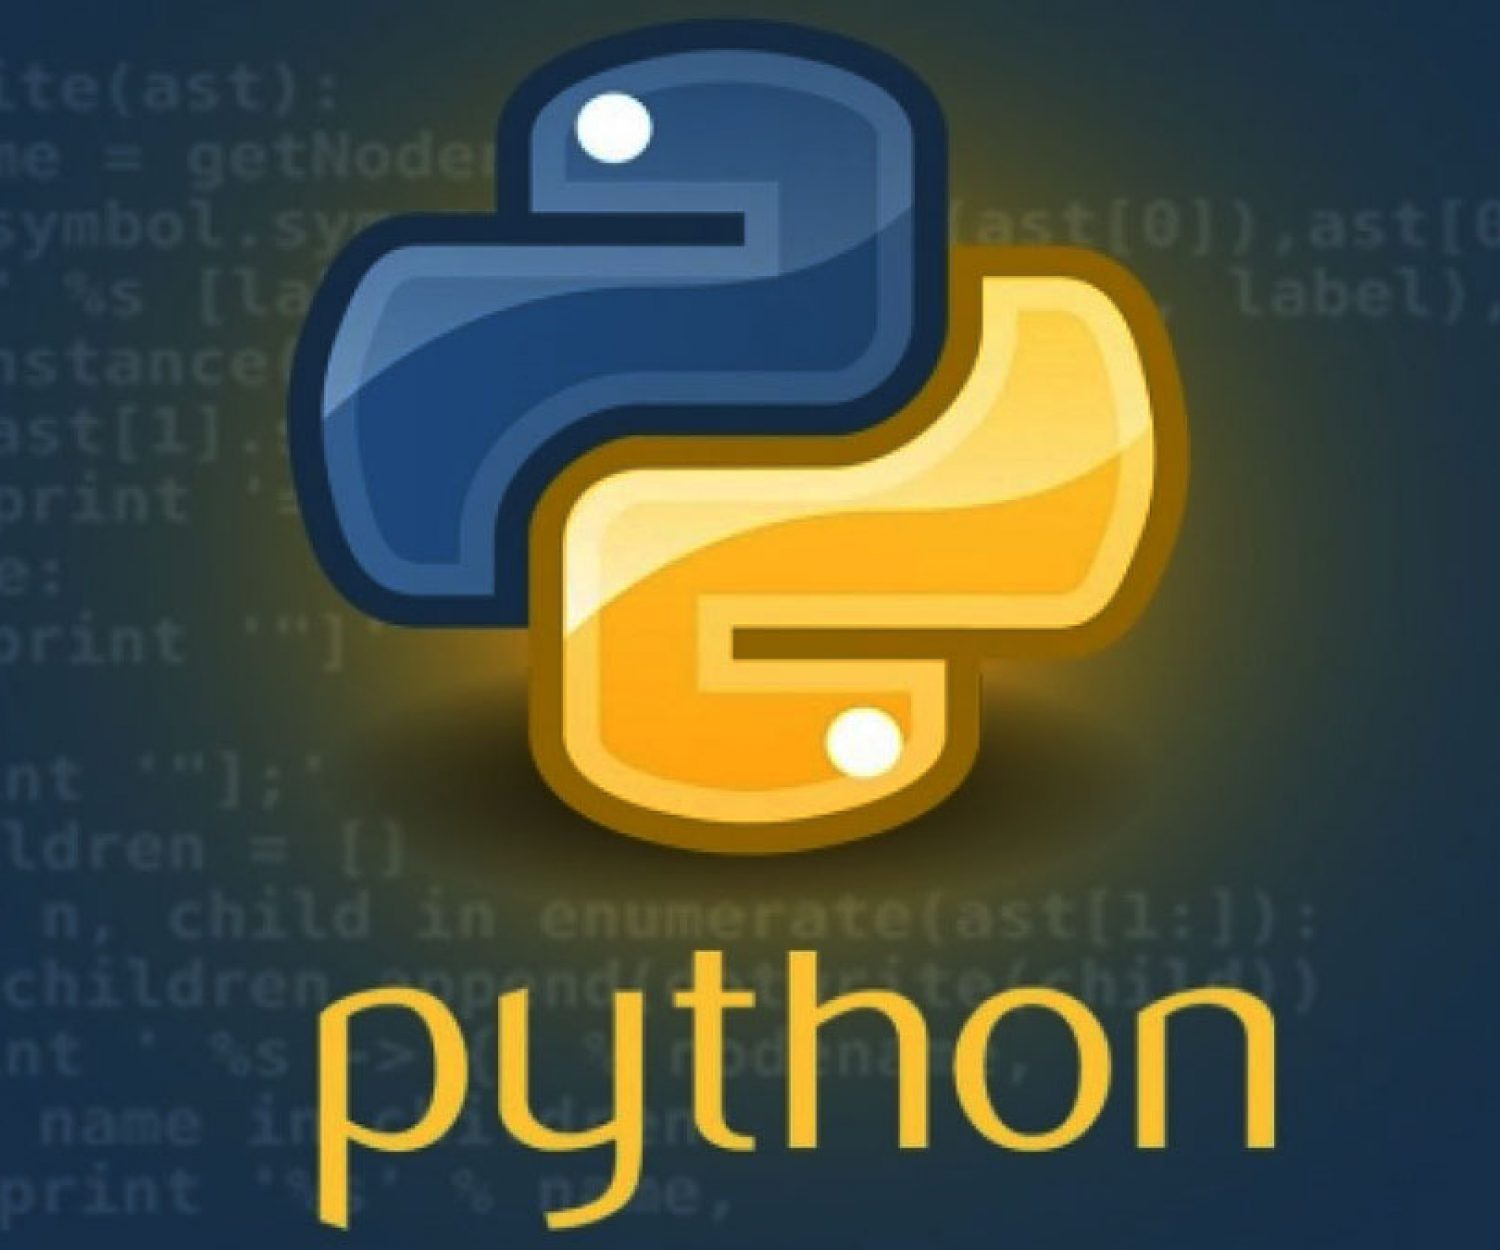 Programming in python 3. Питон язык программирования. Пион язык программирования. Язык программирования пbajy. Питон язык программирования программа.